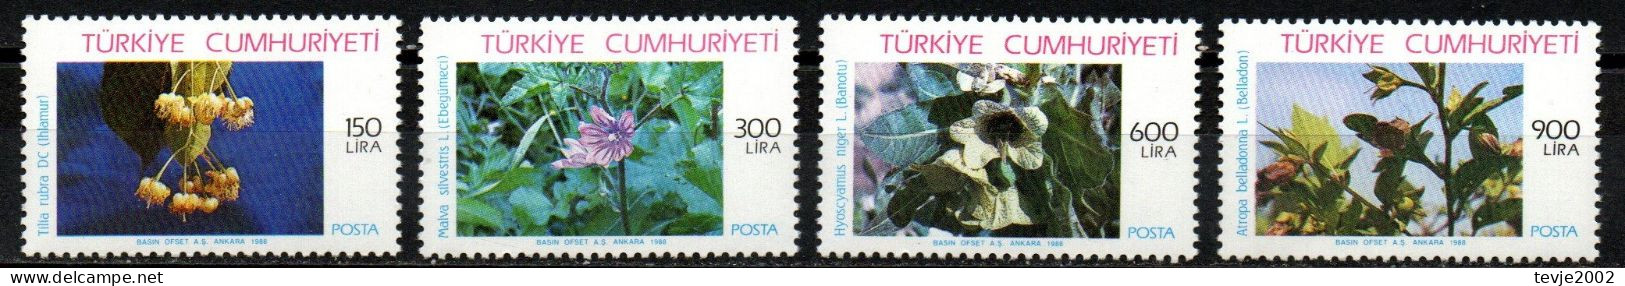 Türkei 1988 - Mi.Nr. 2840 - 2843 - Postfrisch MNH - Pflanzen Plants - Medicinal Plants